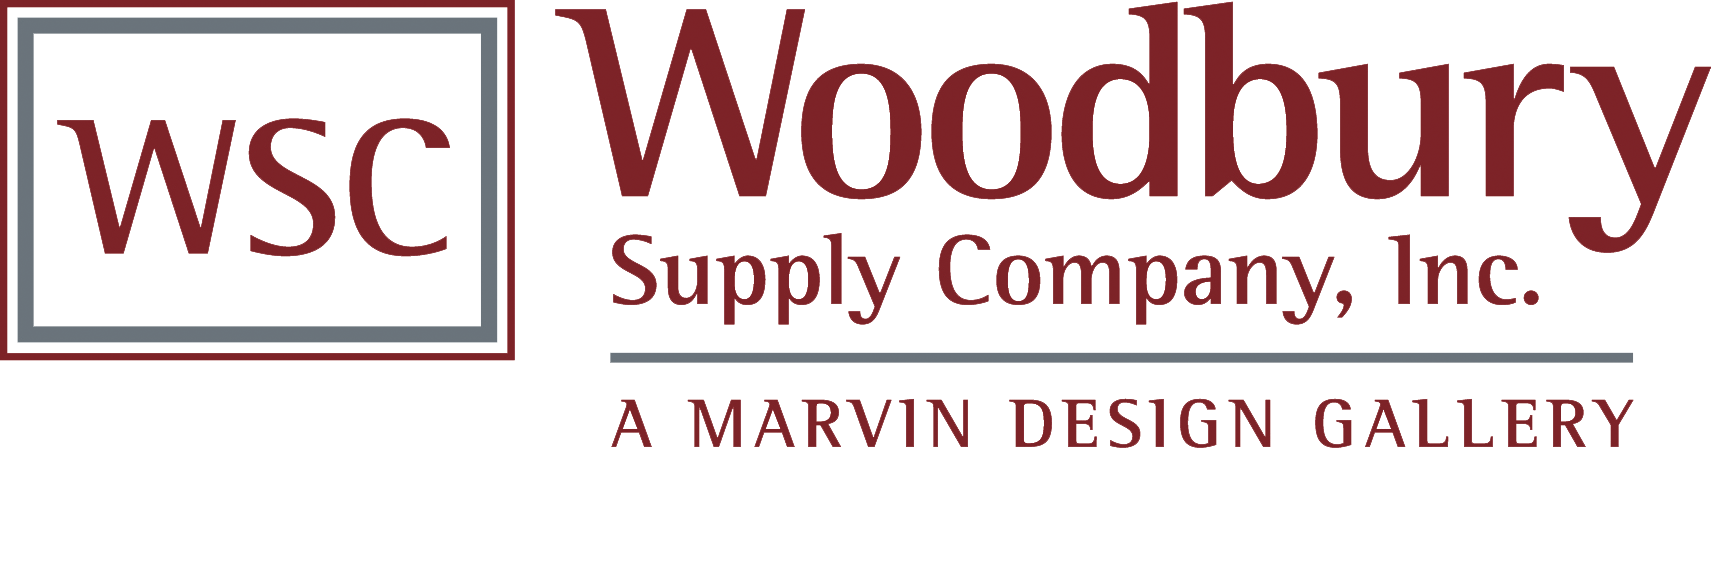 WSC Logo Design Gallery with address